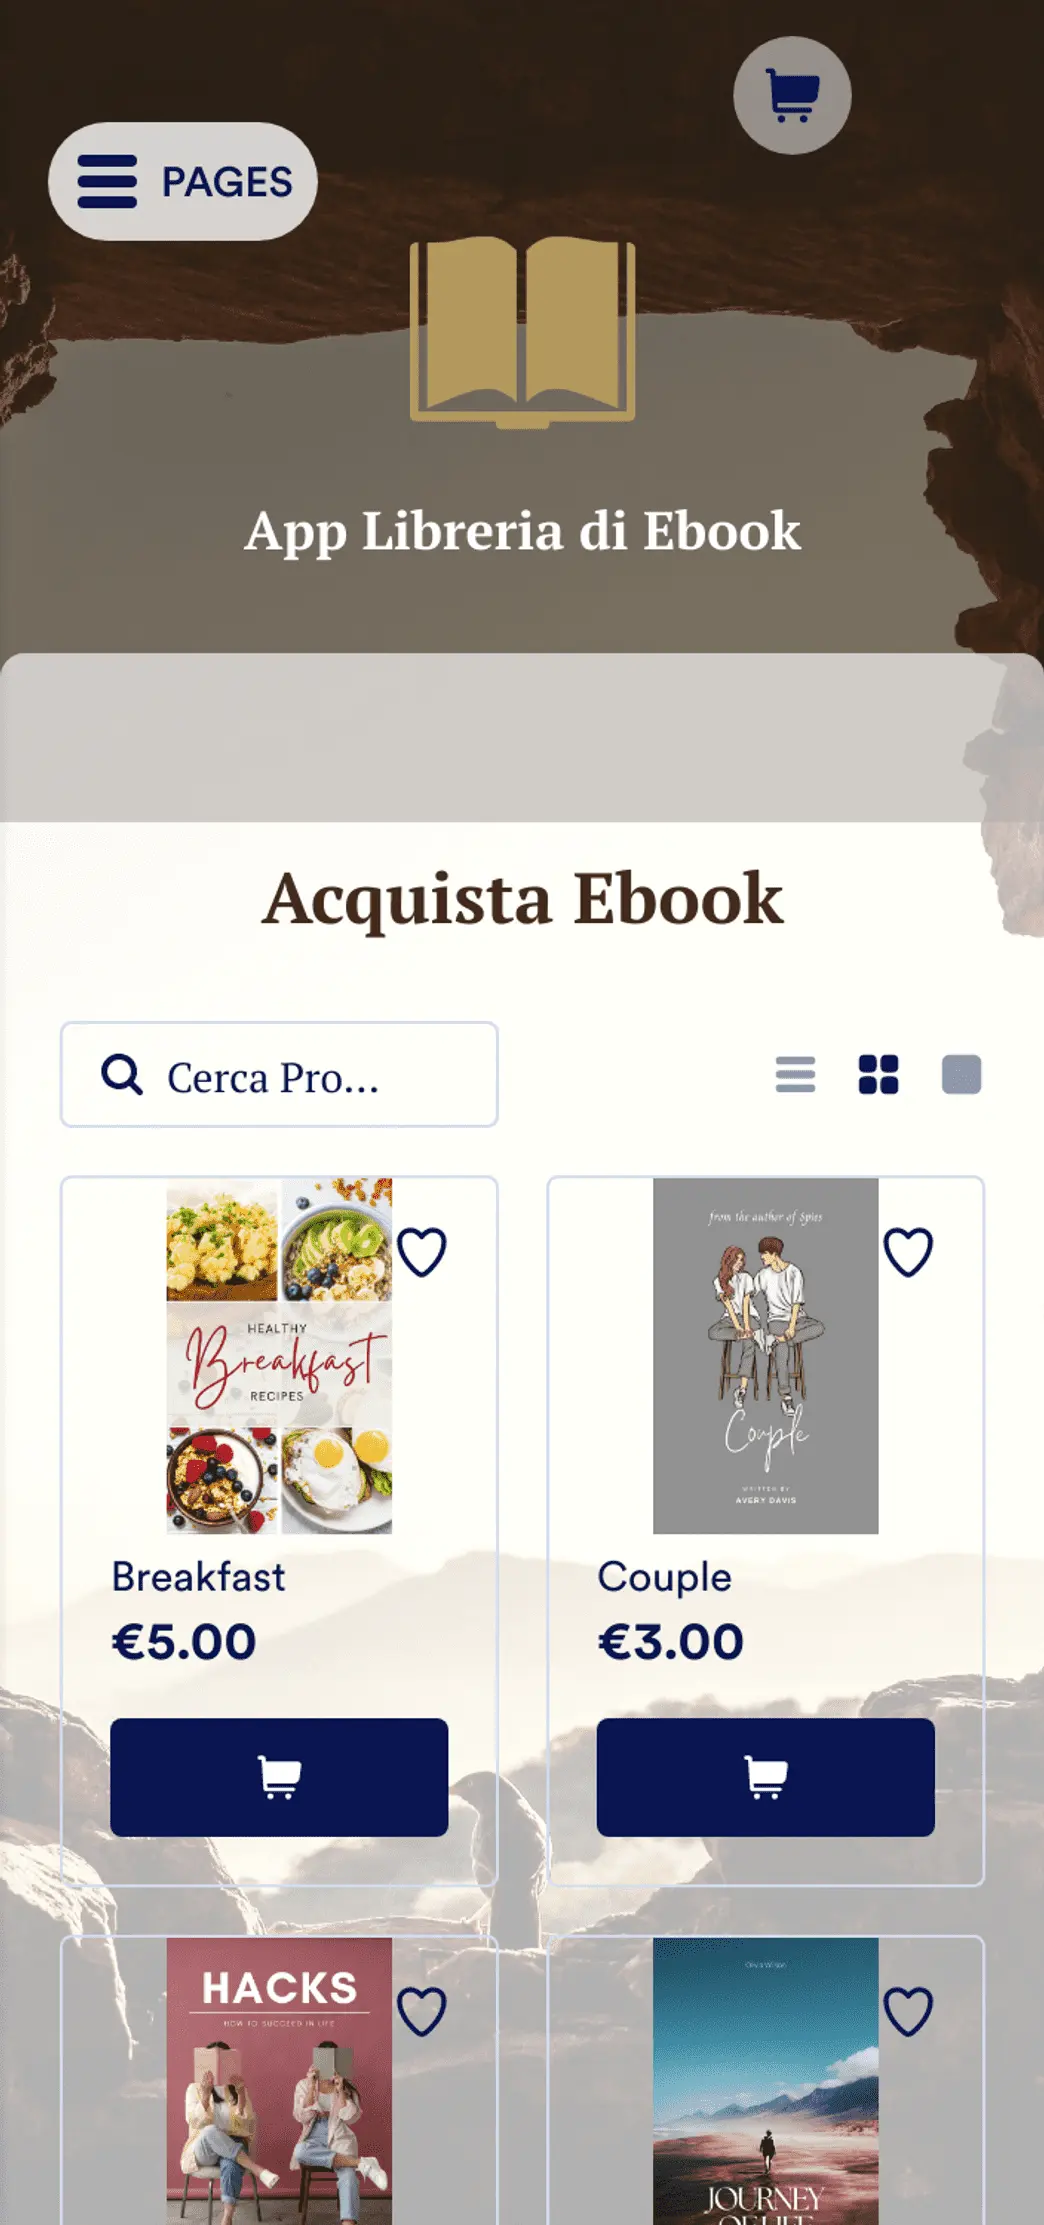 App Libreria di Ebook